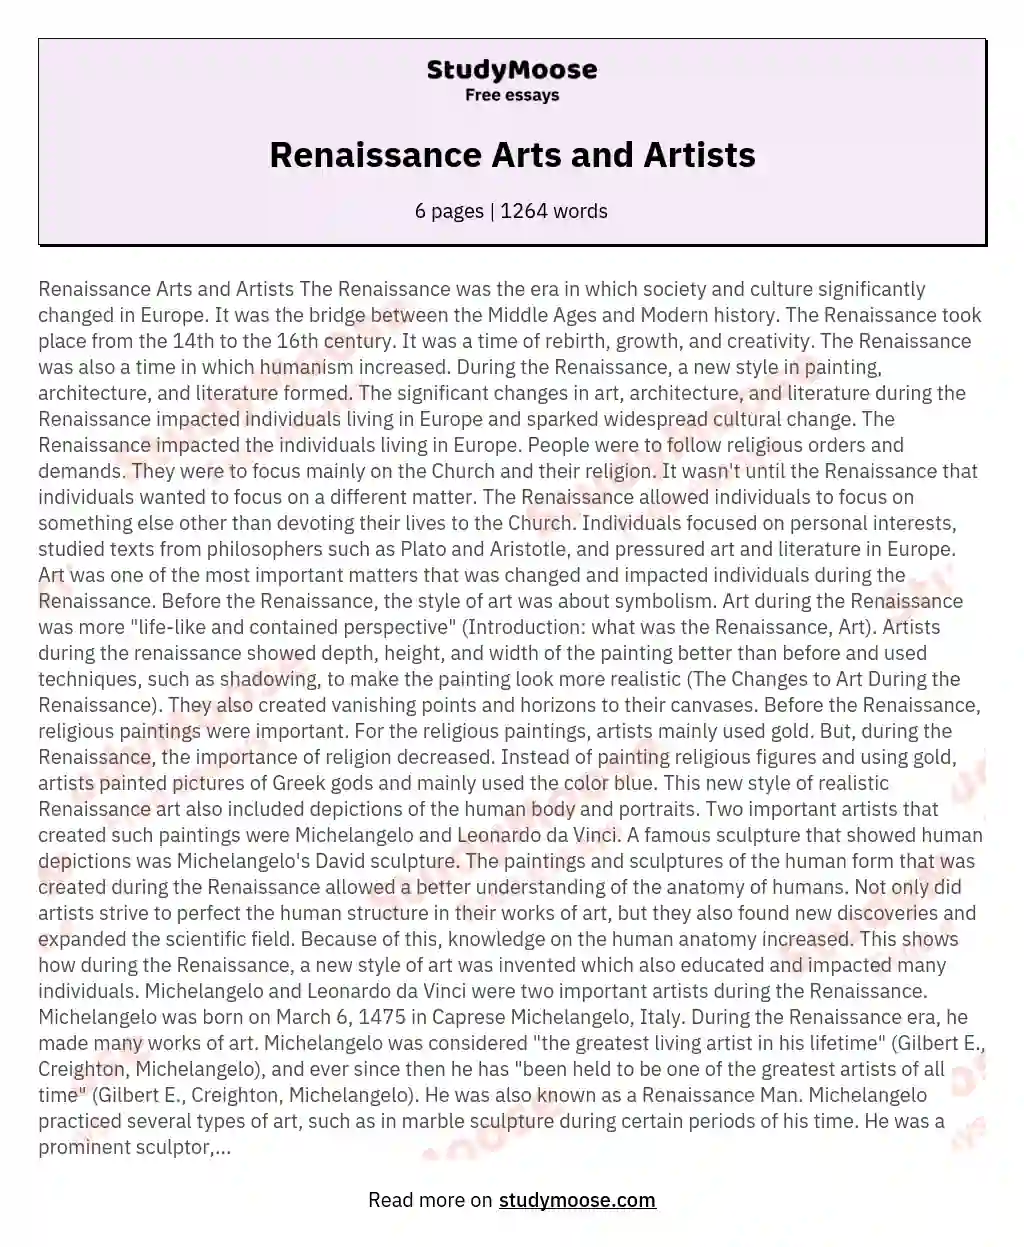 Renaissance Arts and Artists